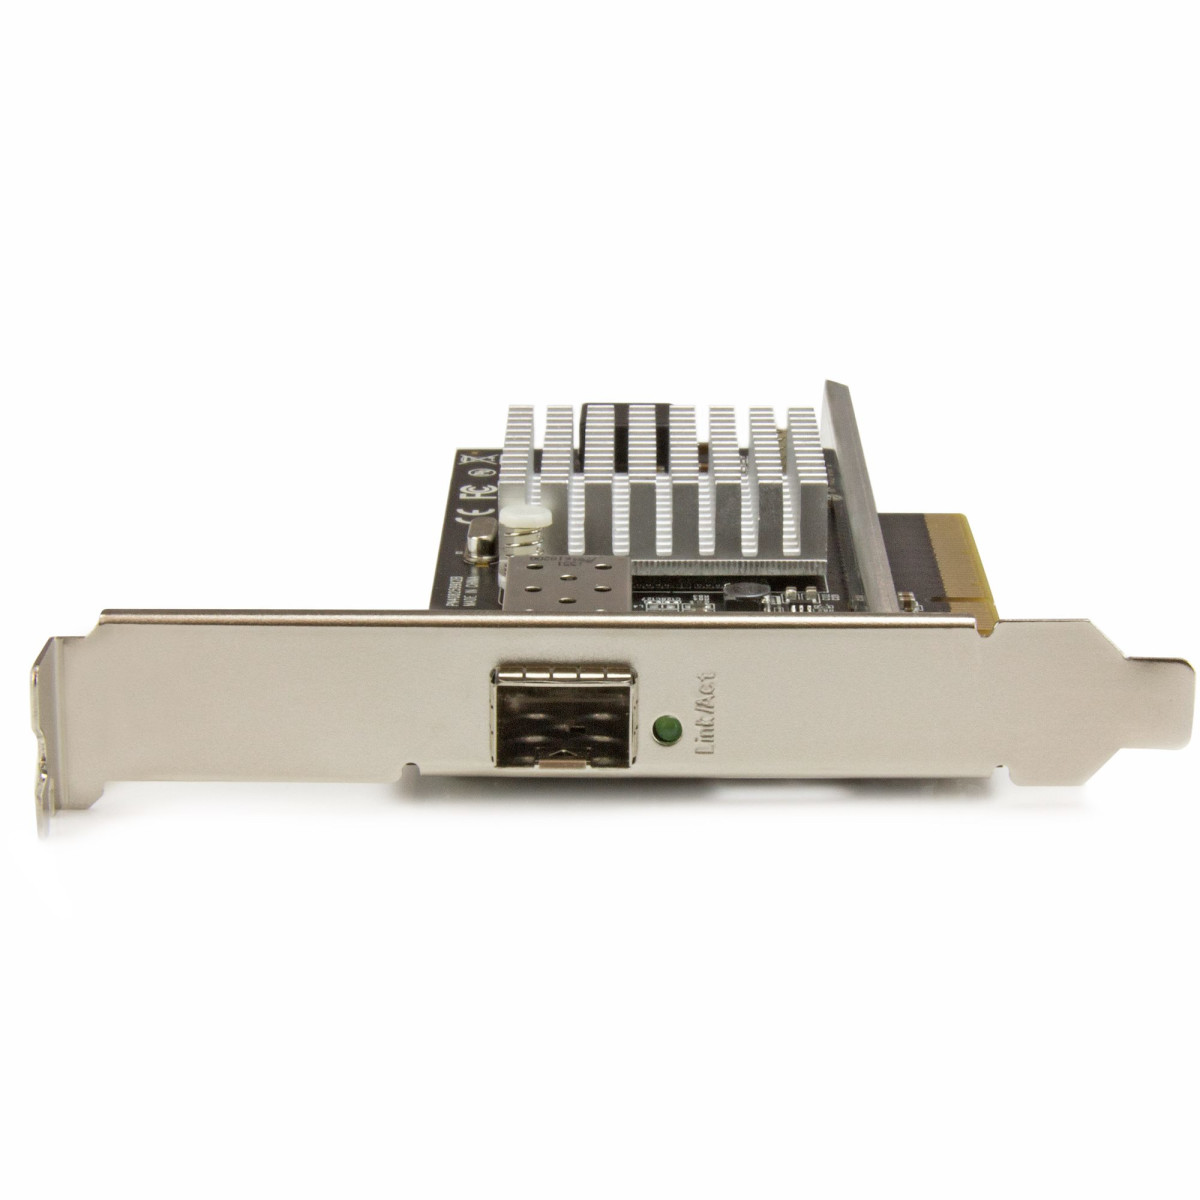 10G Open SFP+ Network Card - PCI Express